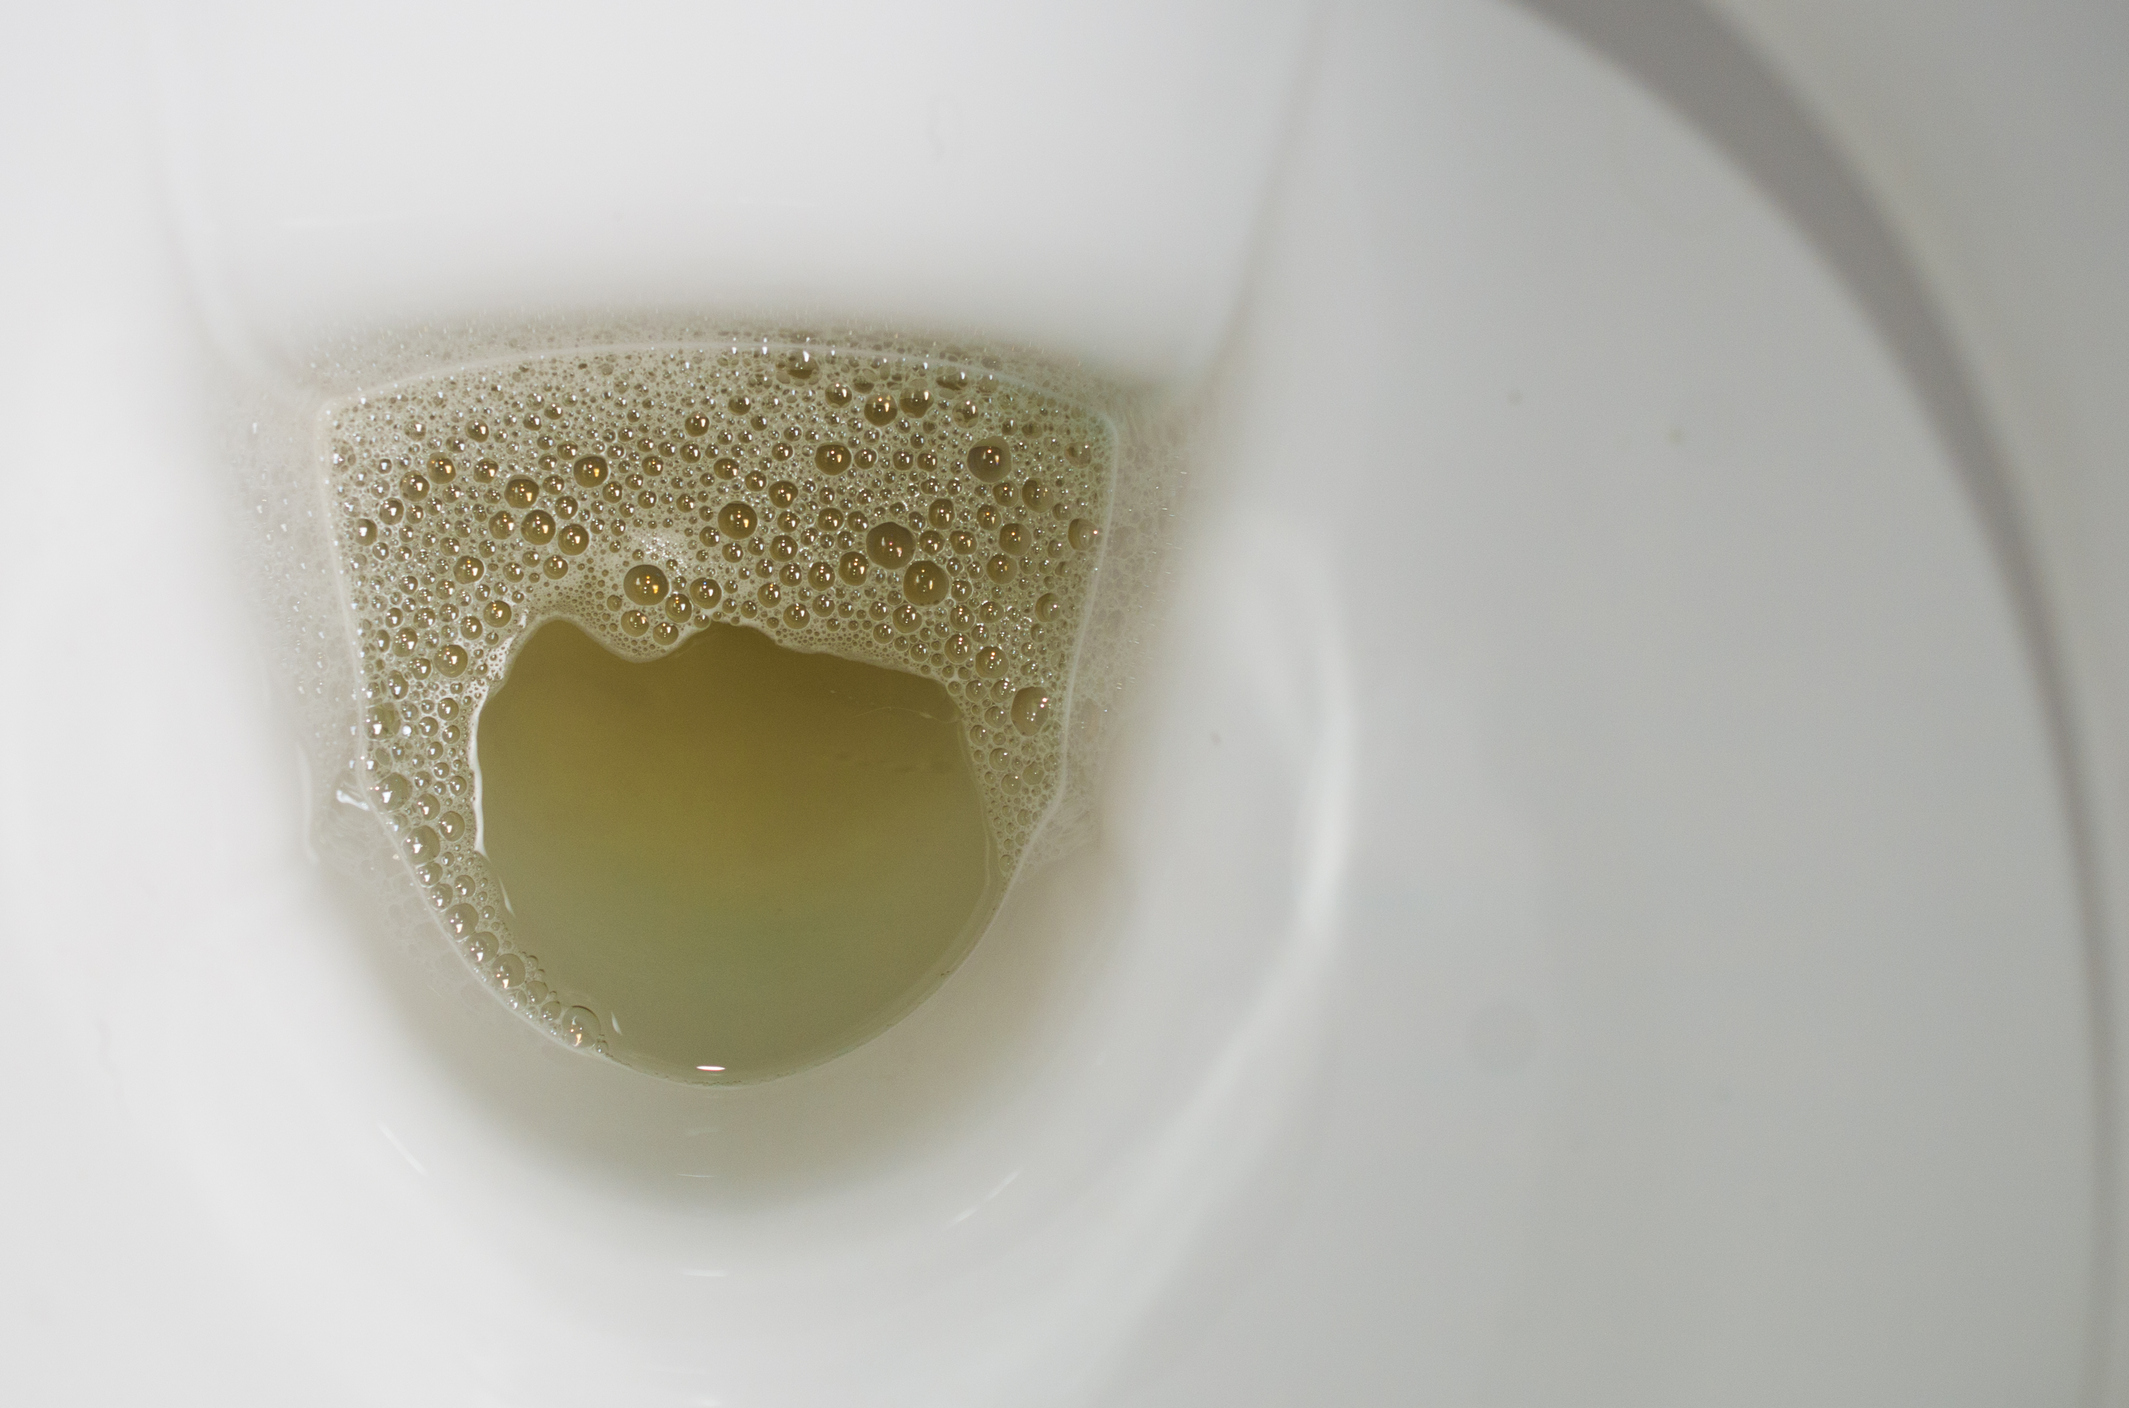 Foamy Urine Causes